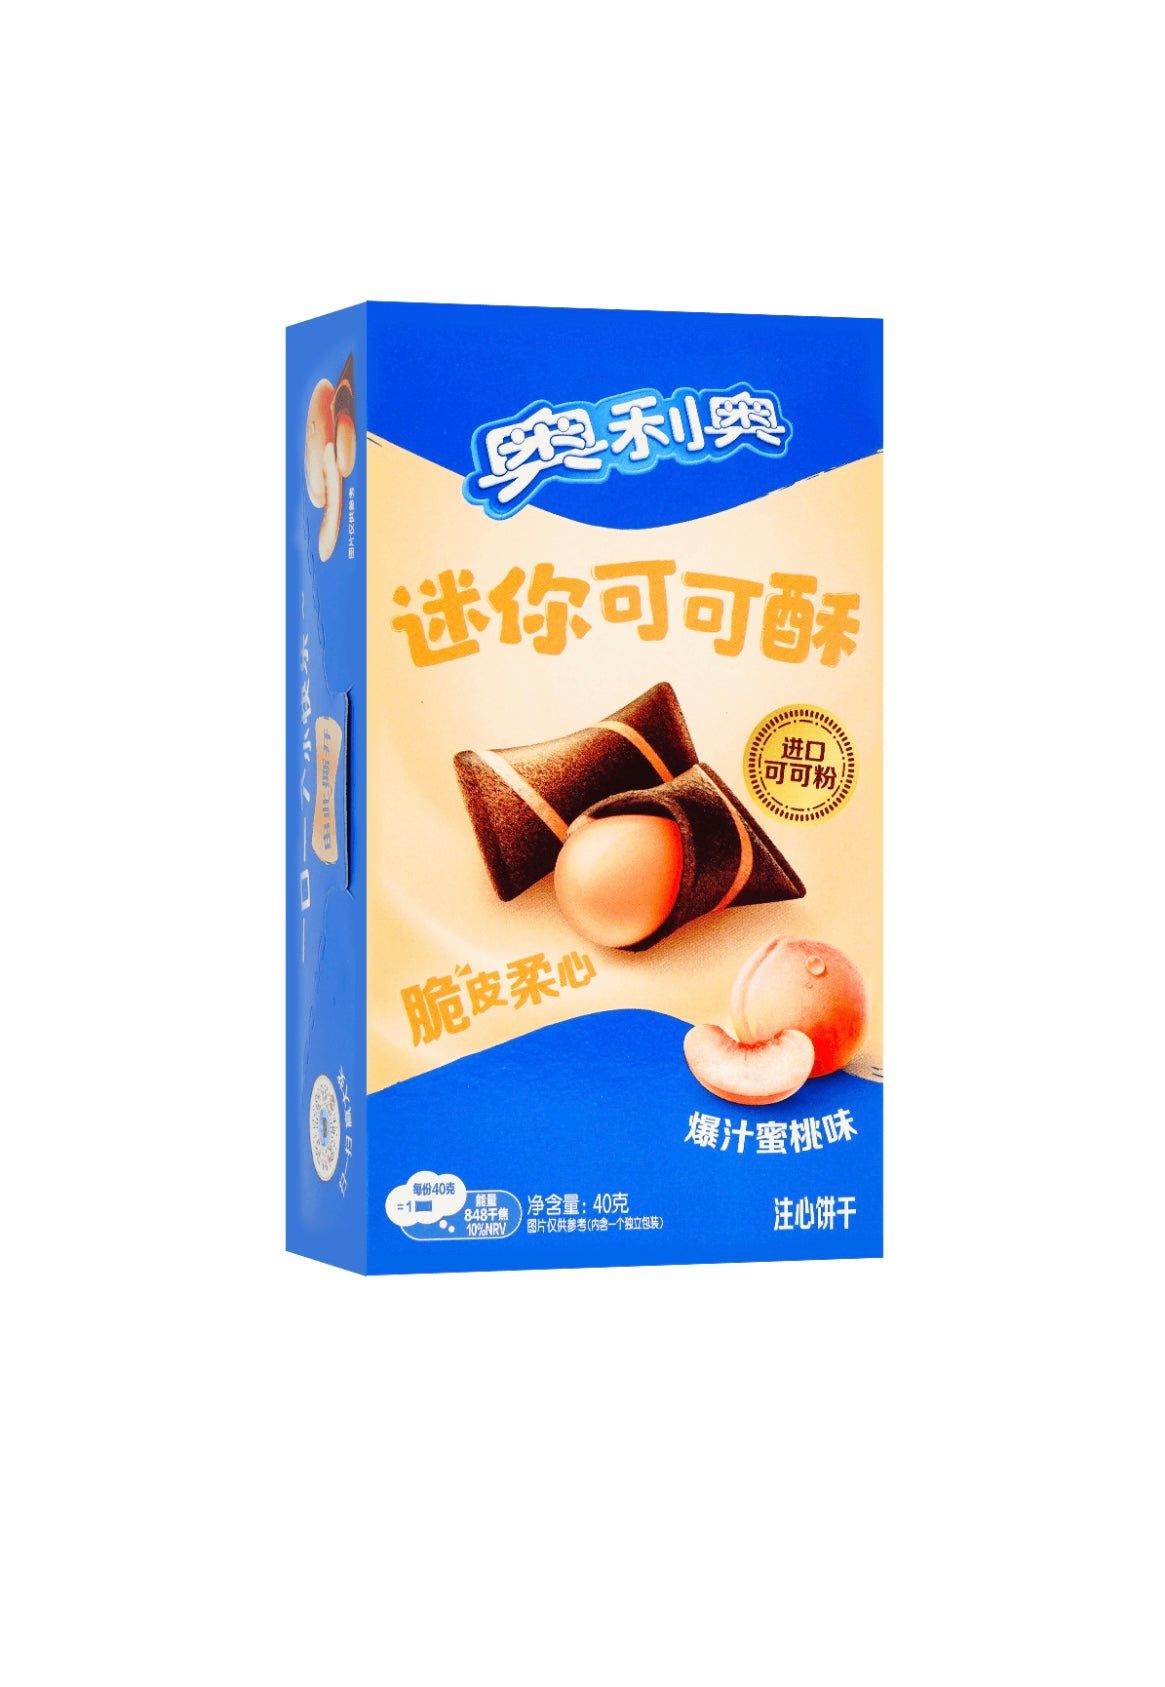 Oreo Peach Cream Wafers (China)